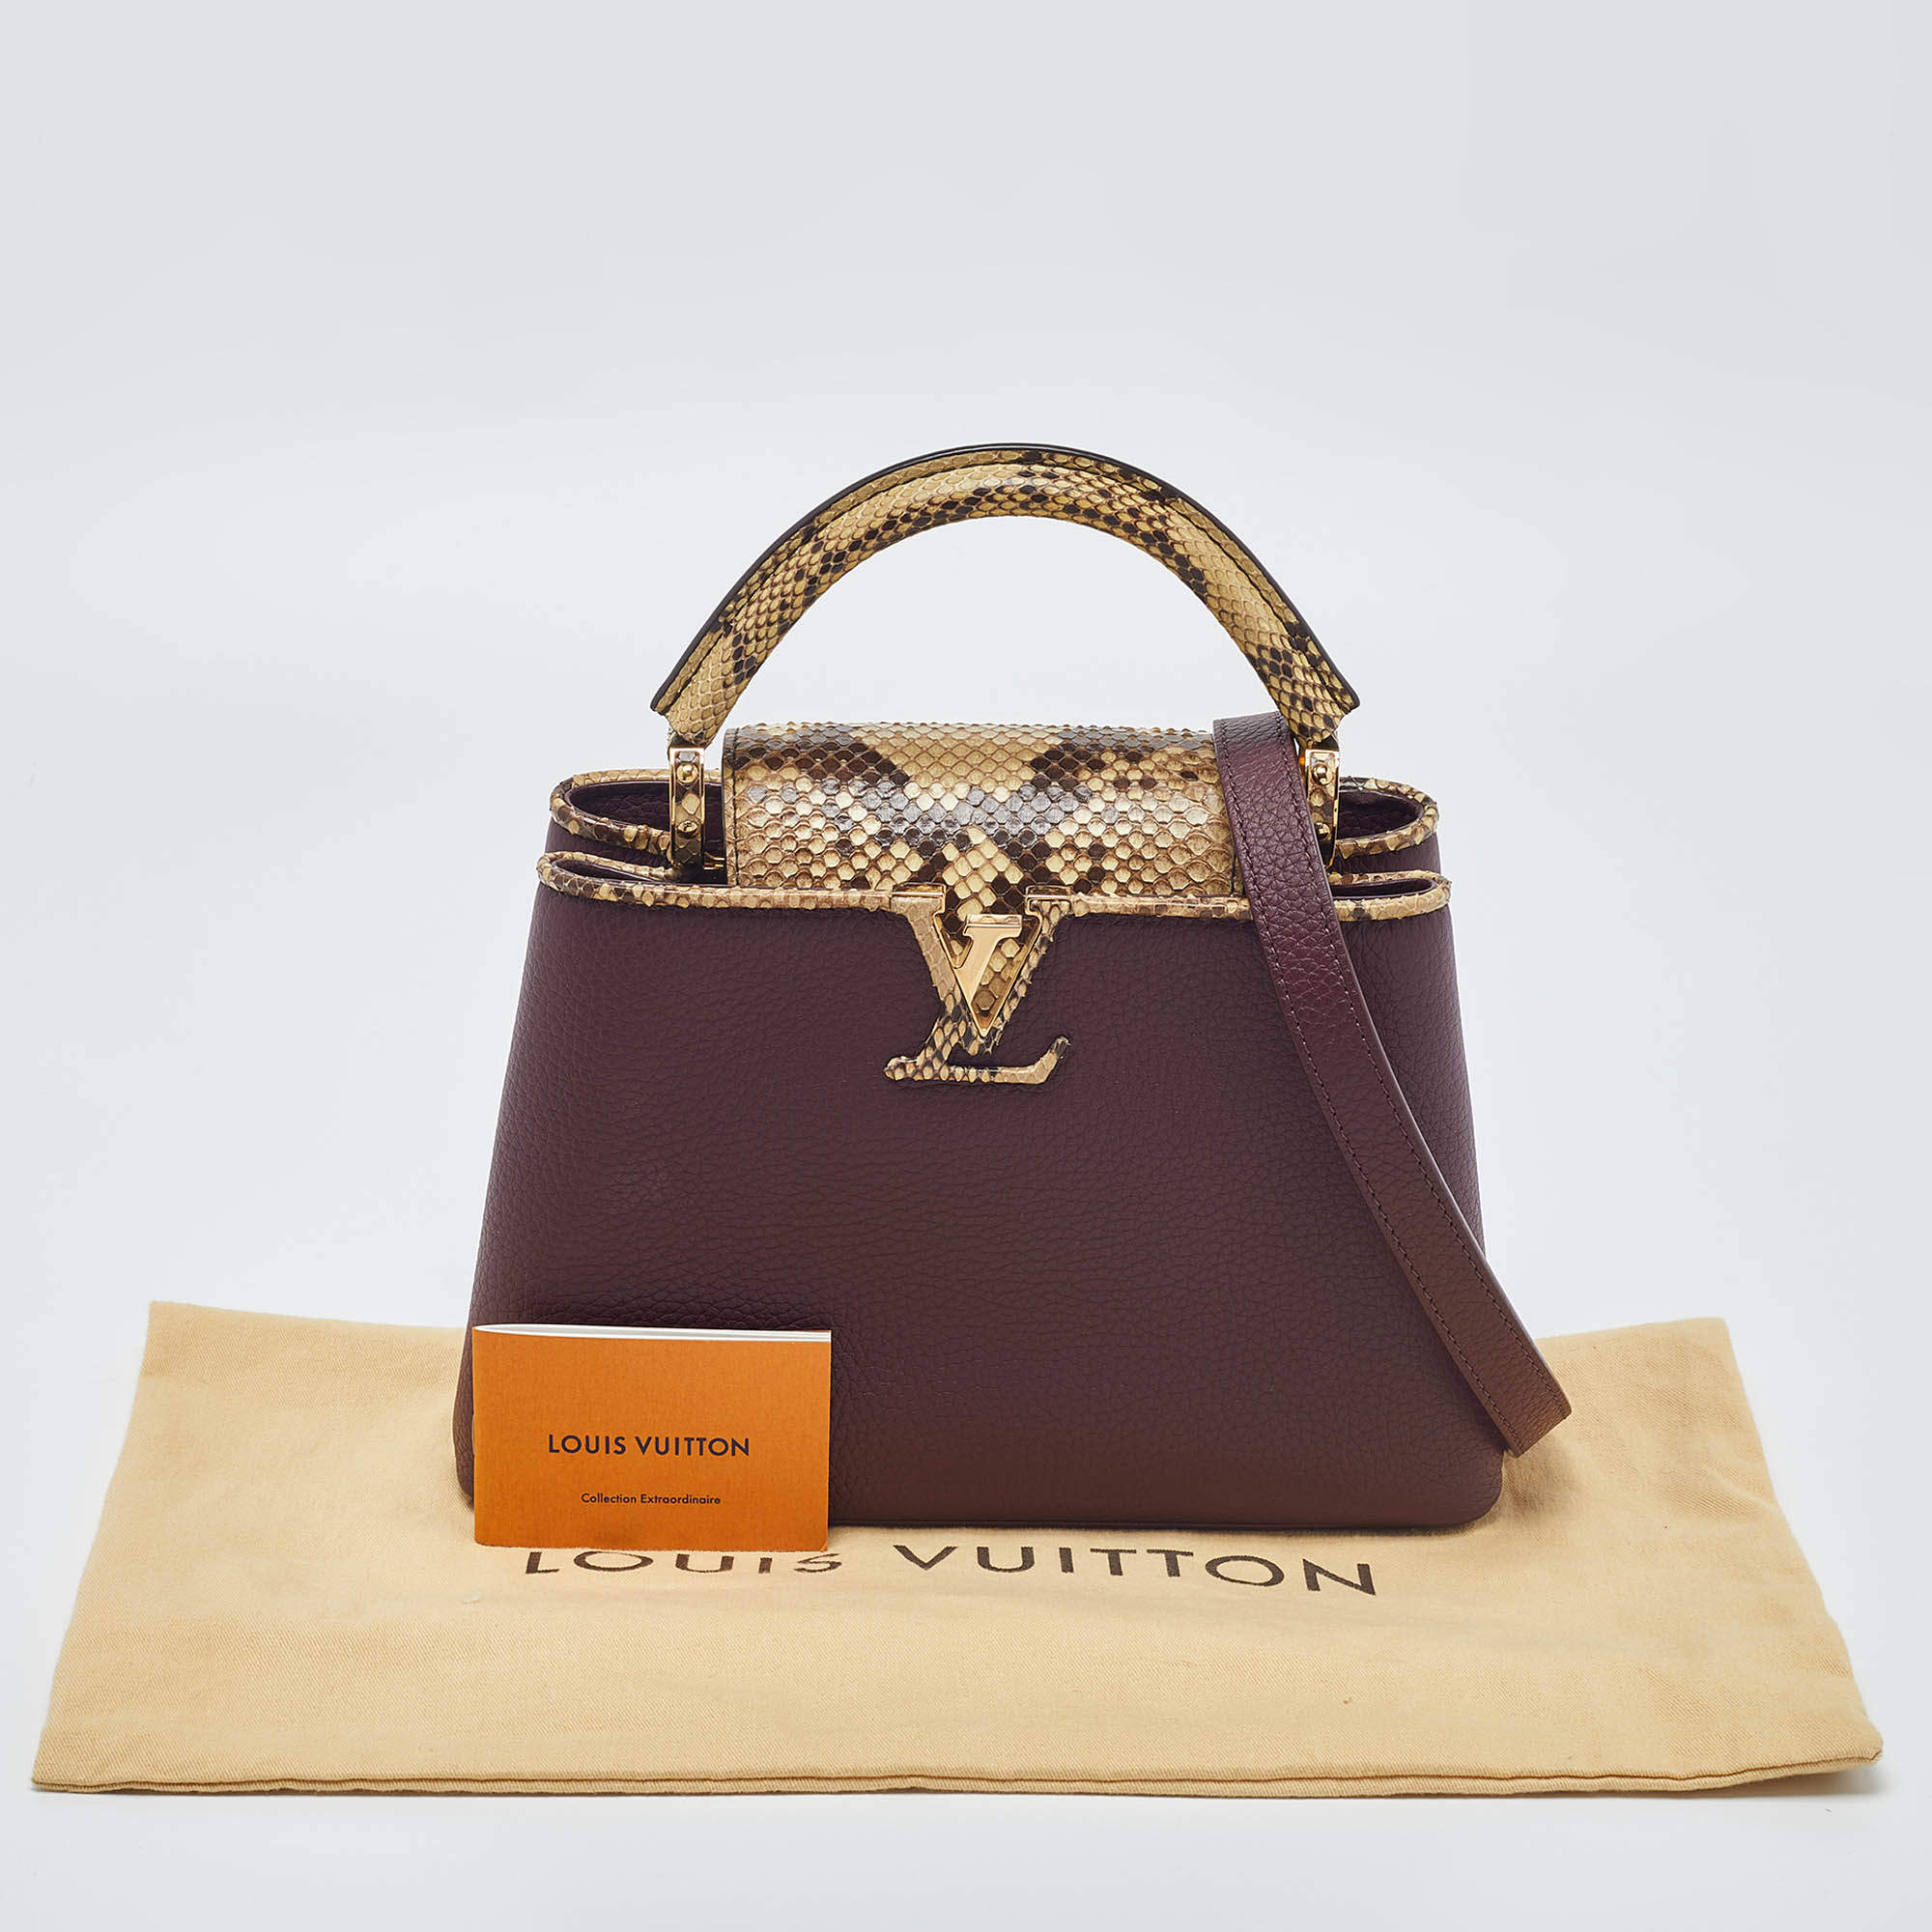 Shop Louis Vuitton Capucines Bb (M58726, M58694) by lifeisfun